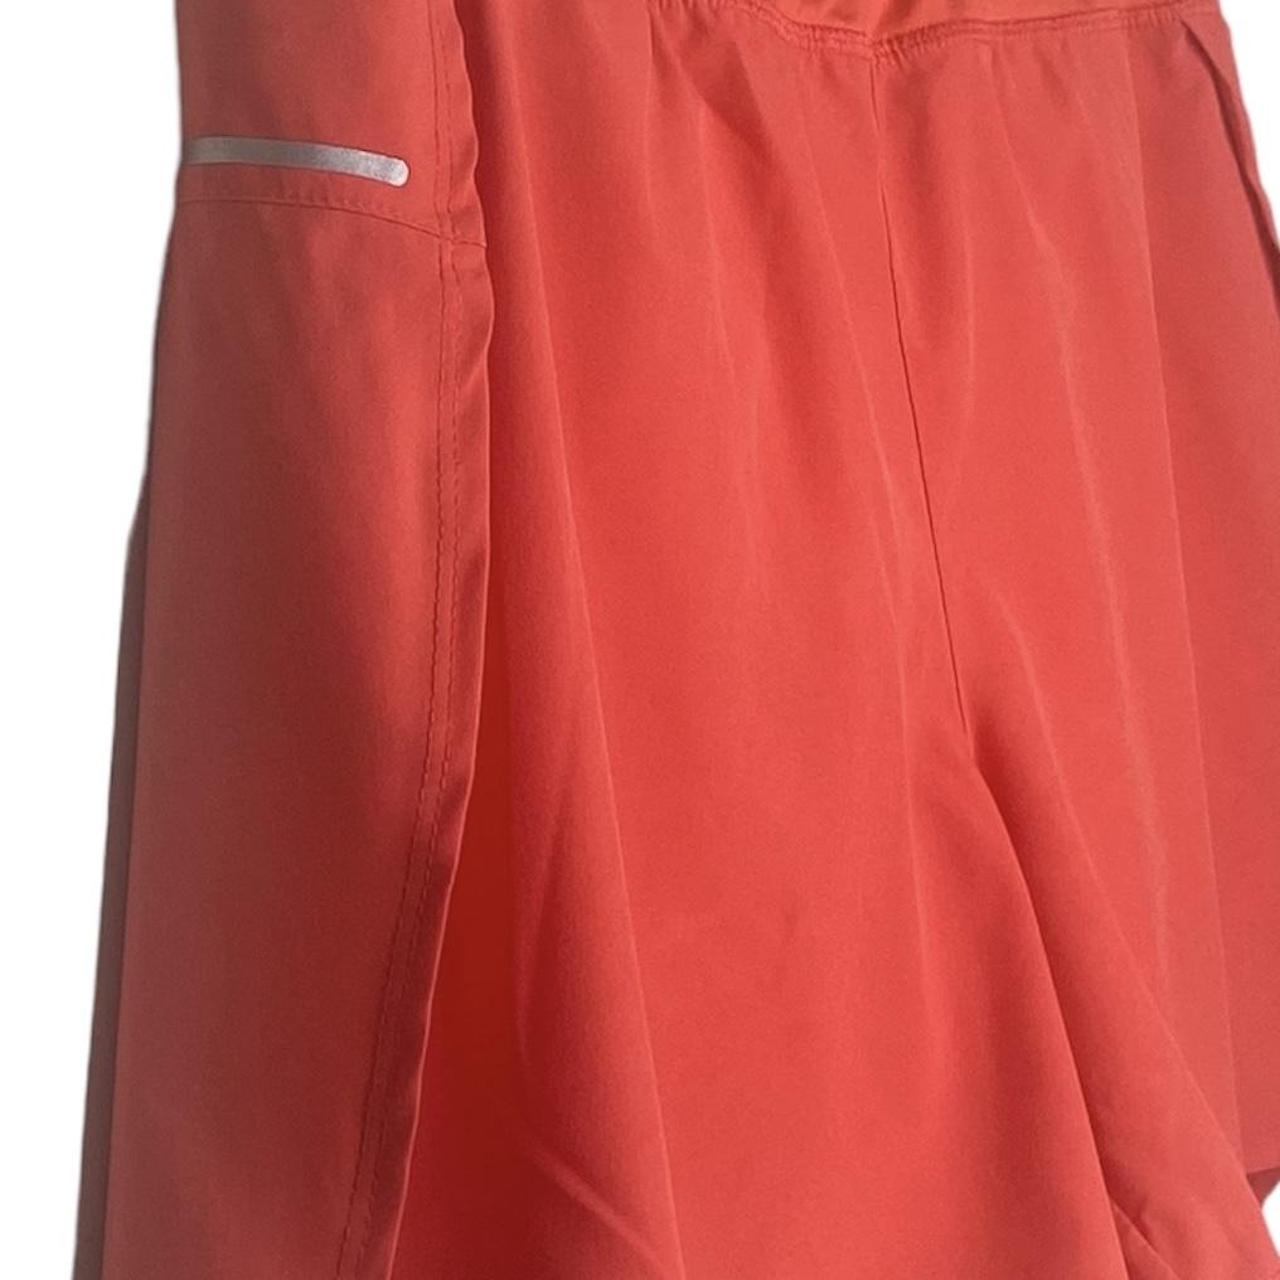 AVIA Women's Athletic Skort L Neon Orange Small - Depop